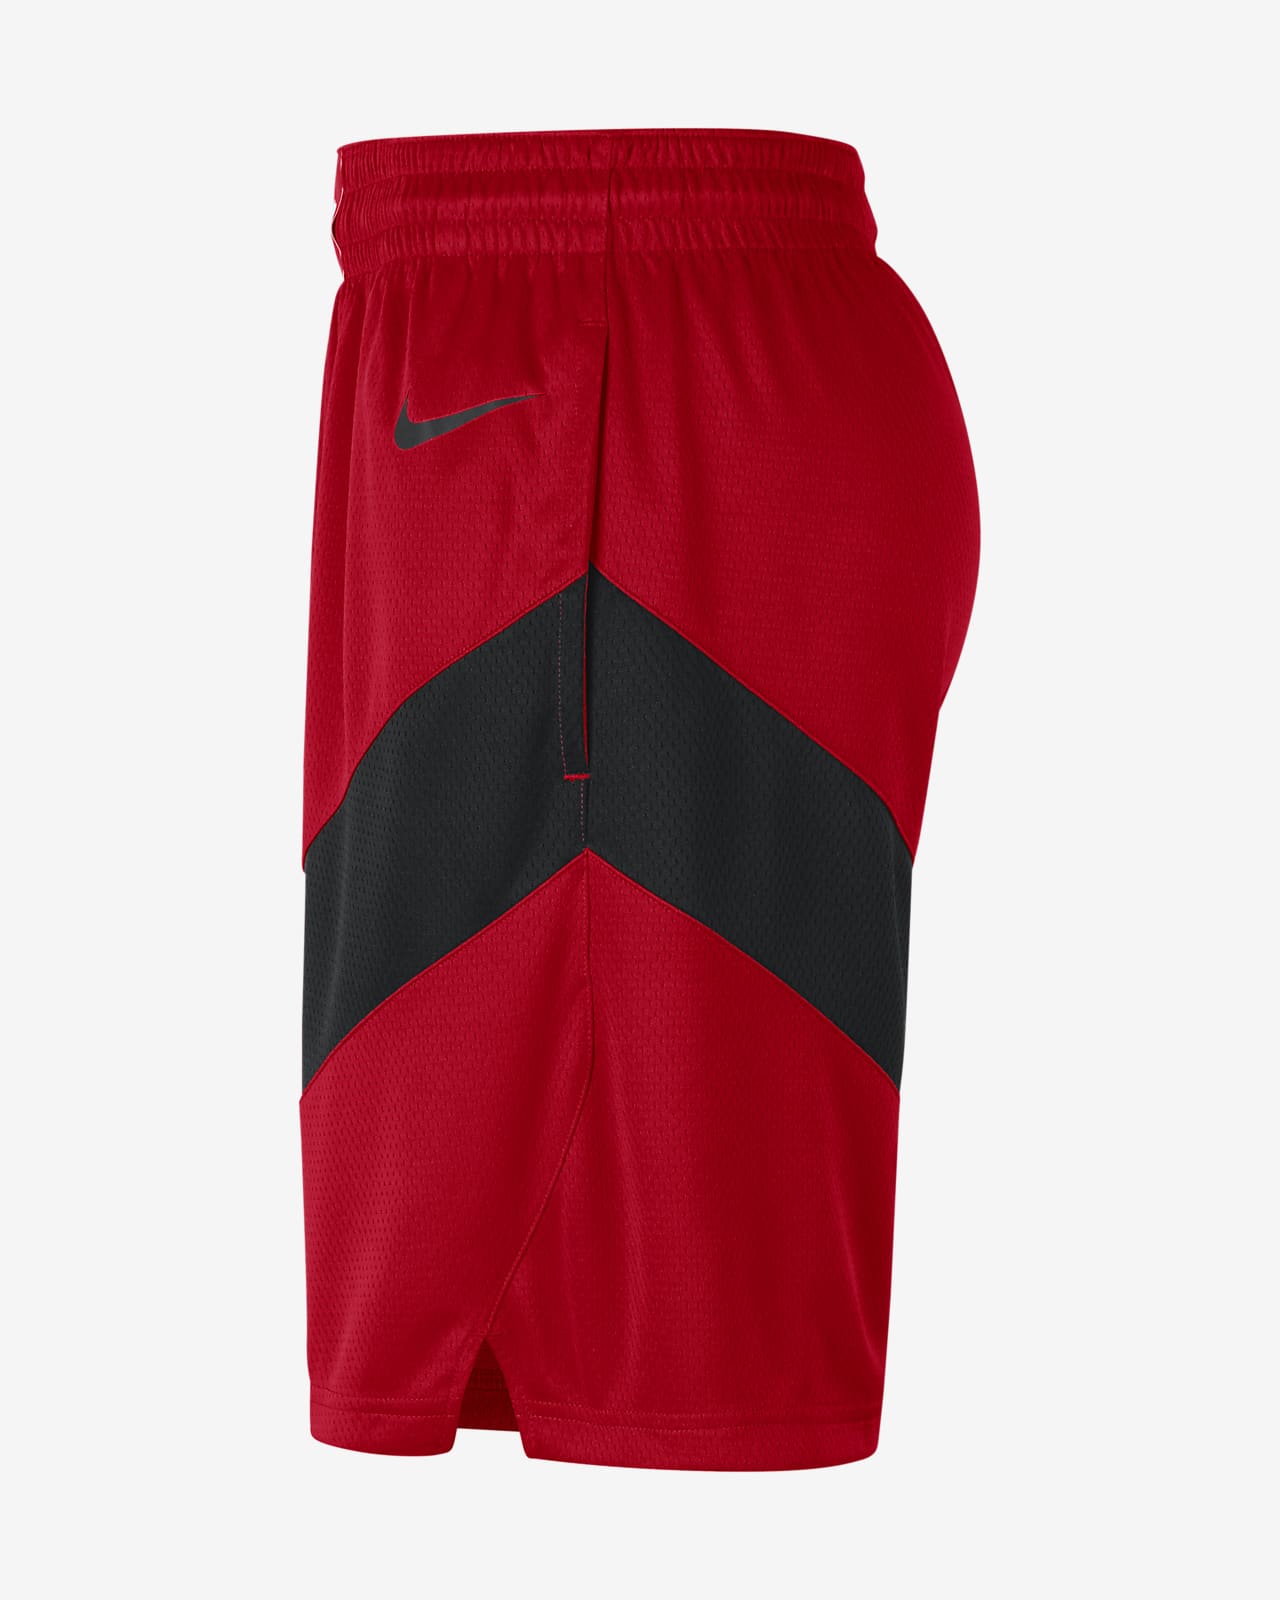 Toronto Raptors Nike 2019/20 City Edition Swingman Shorts - Black